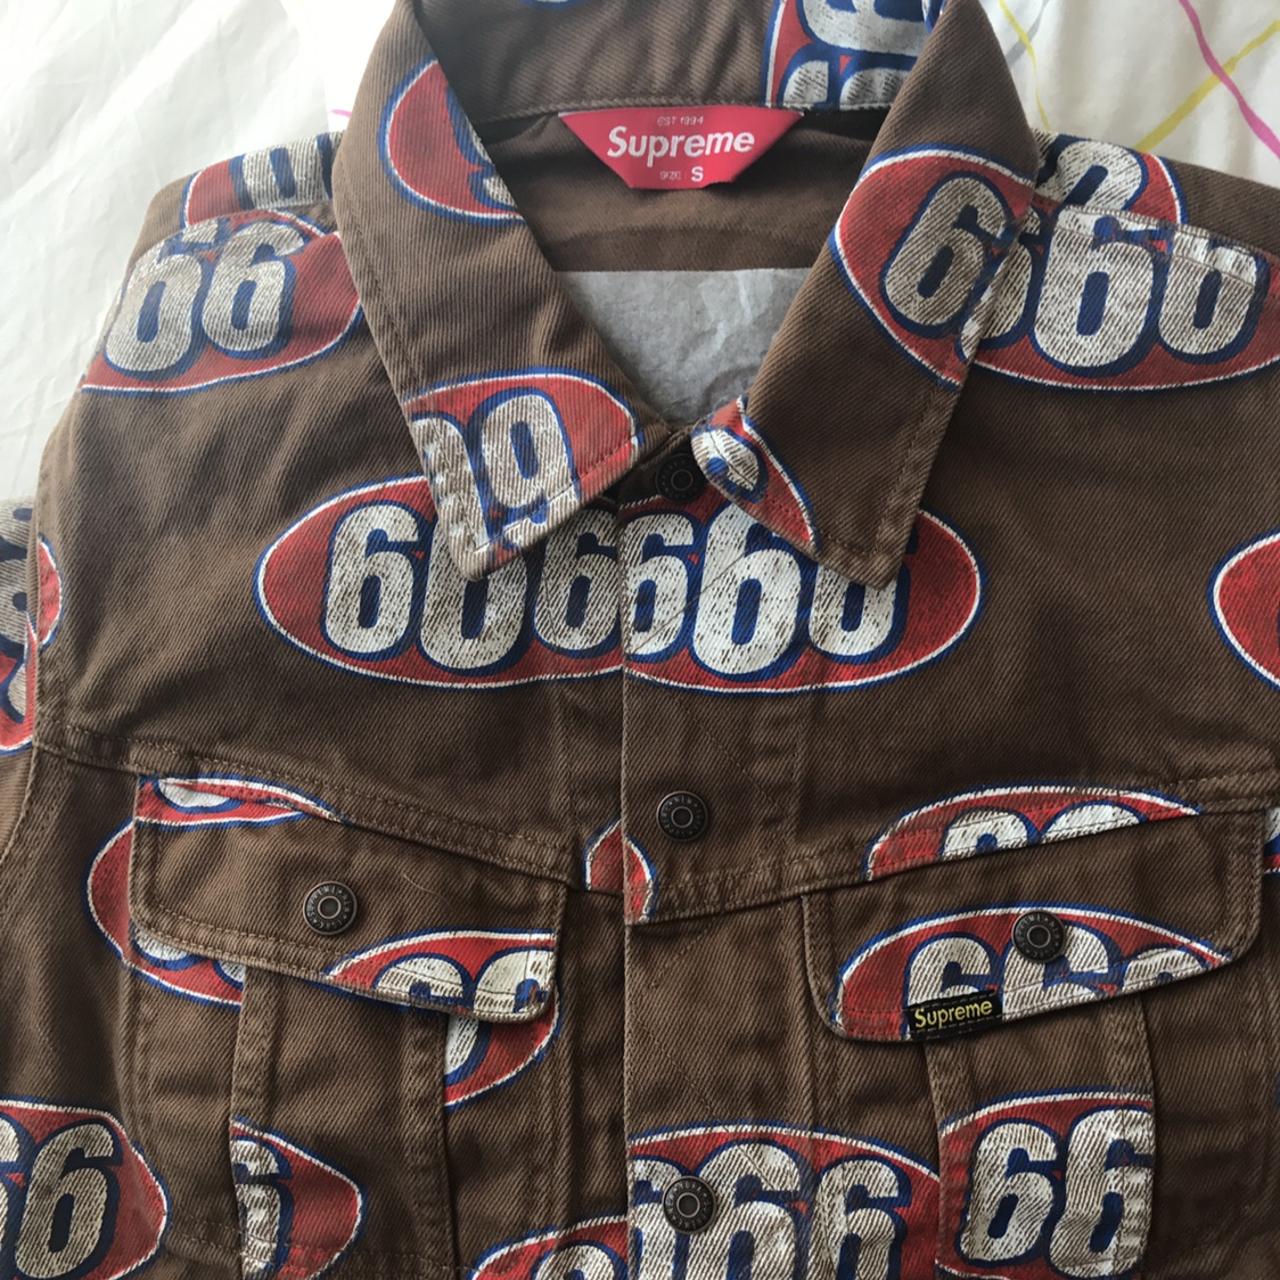 Supreme 666 brown denim jacket size small worn but...